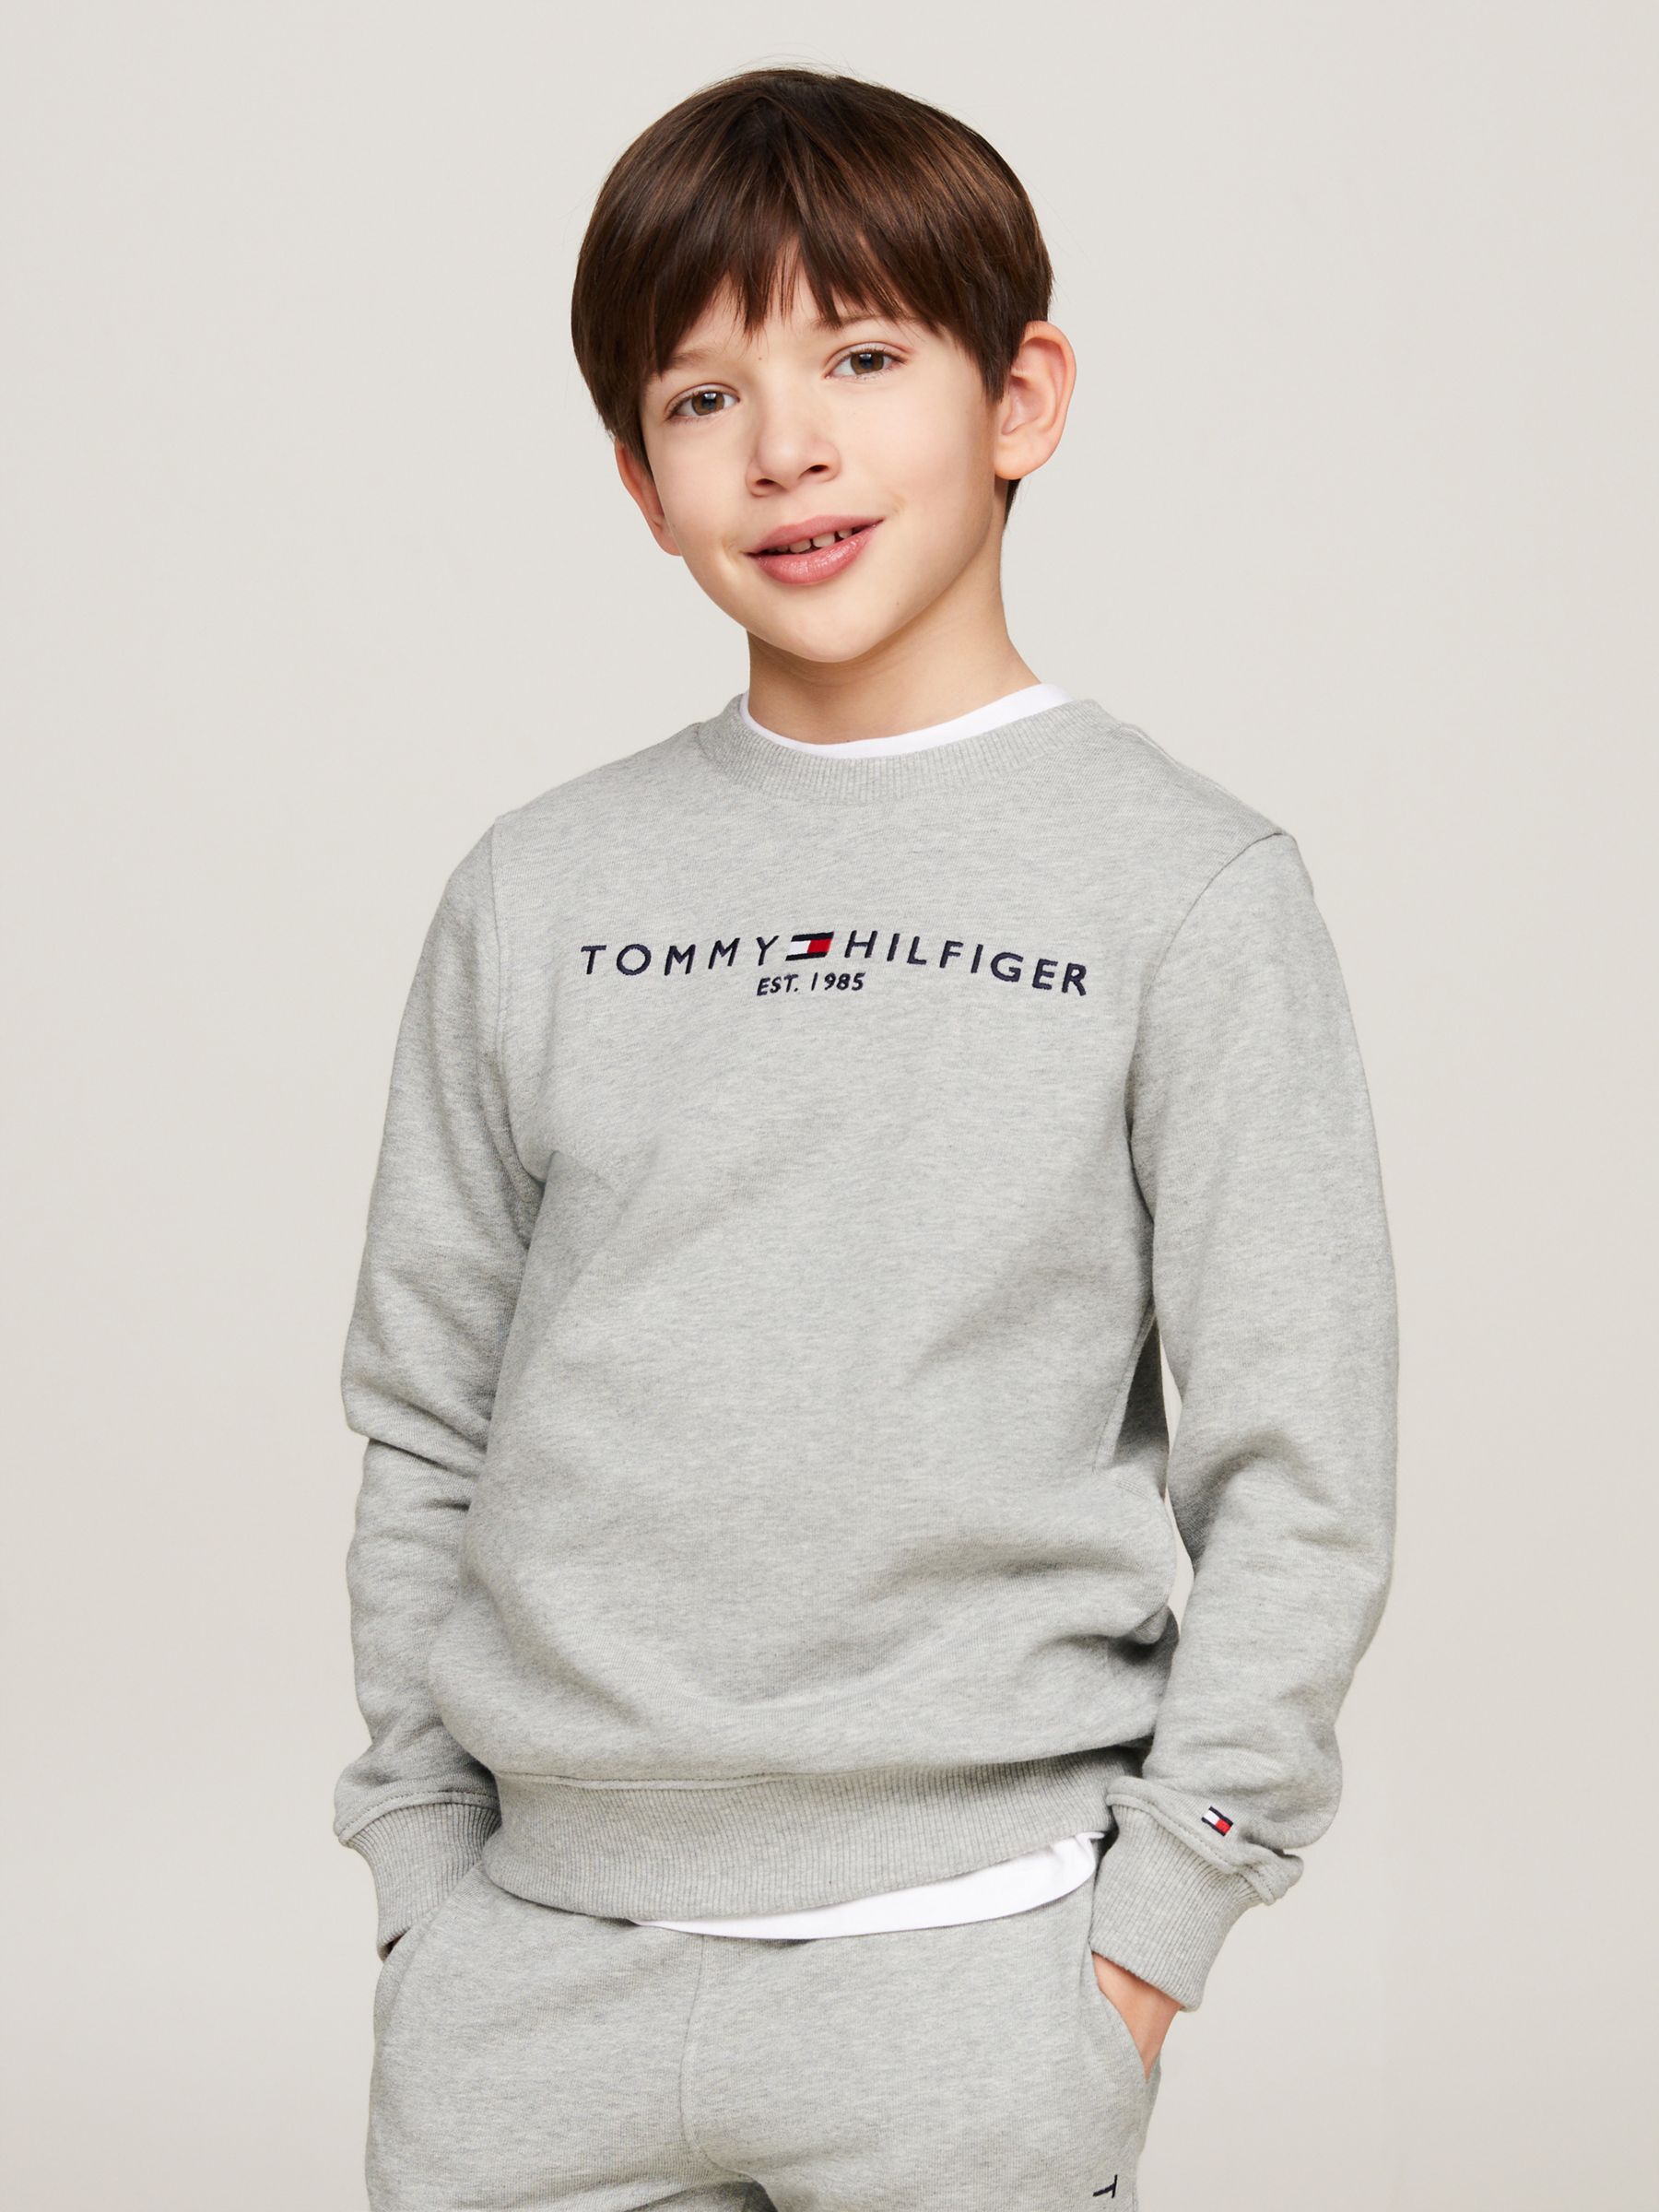 Tommy Hilfiger Kids\' Essential Organic Lewis & Logo John Cotton Partners at Heather Light Grey Sweatshirt